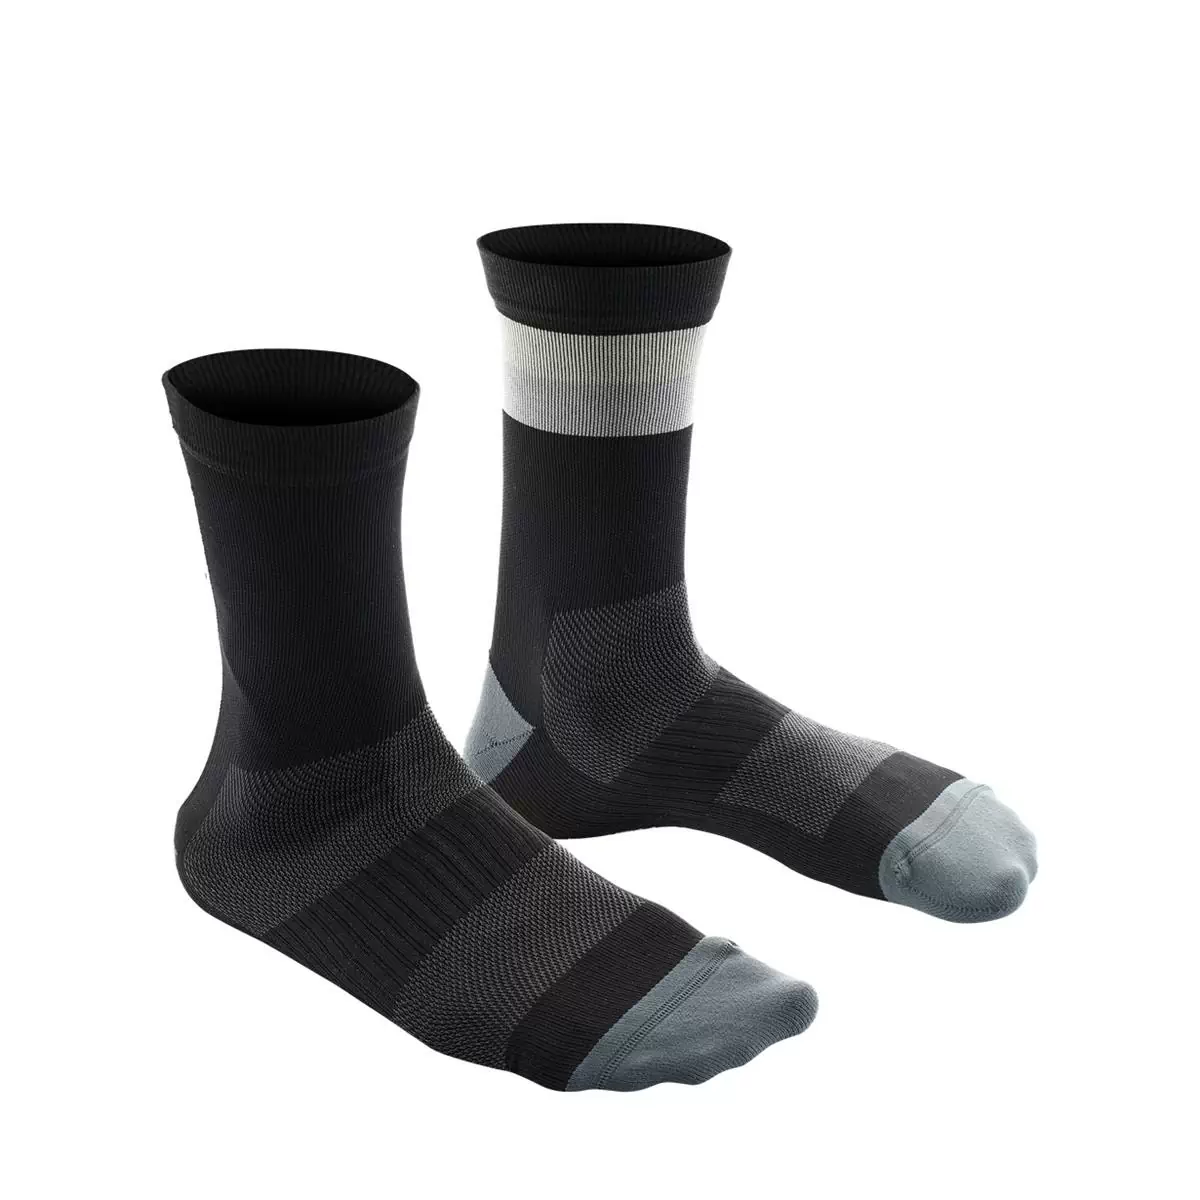 Calze hgAER Socks Nero Taglia S (36-38) - image